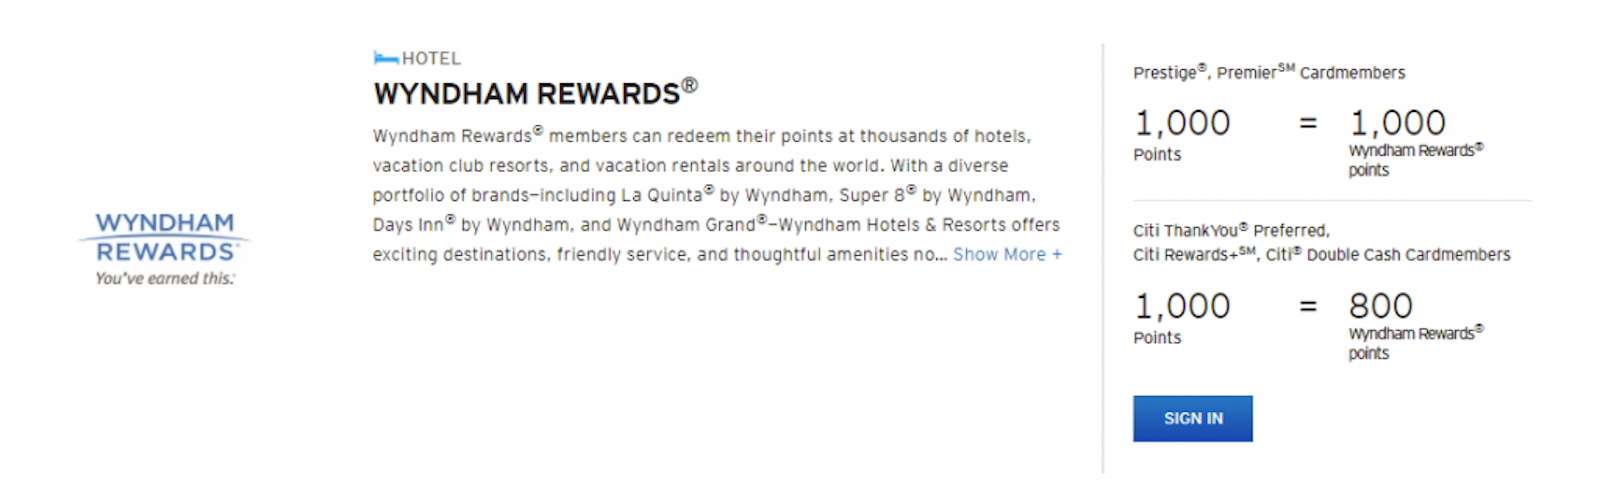 You Can Now Transfer Citi ThankYou Points to Wyndham Rewards